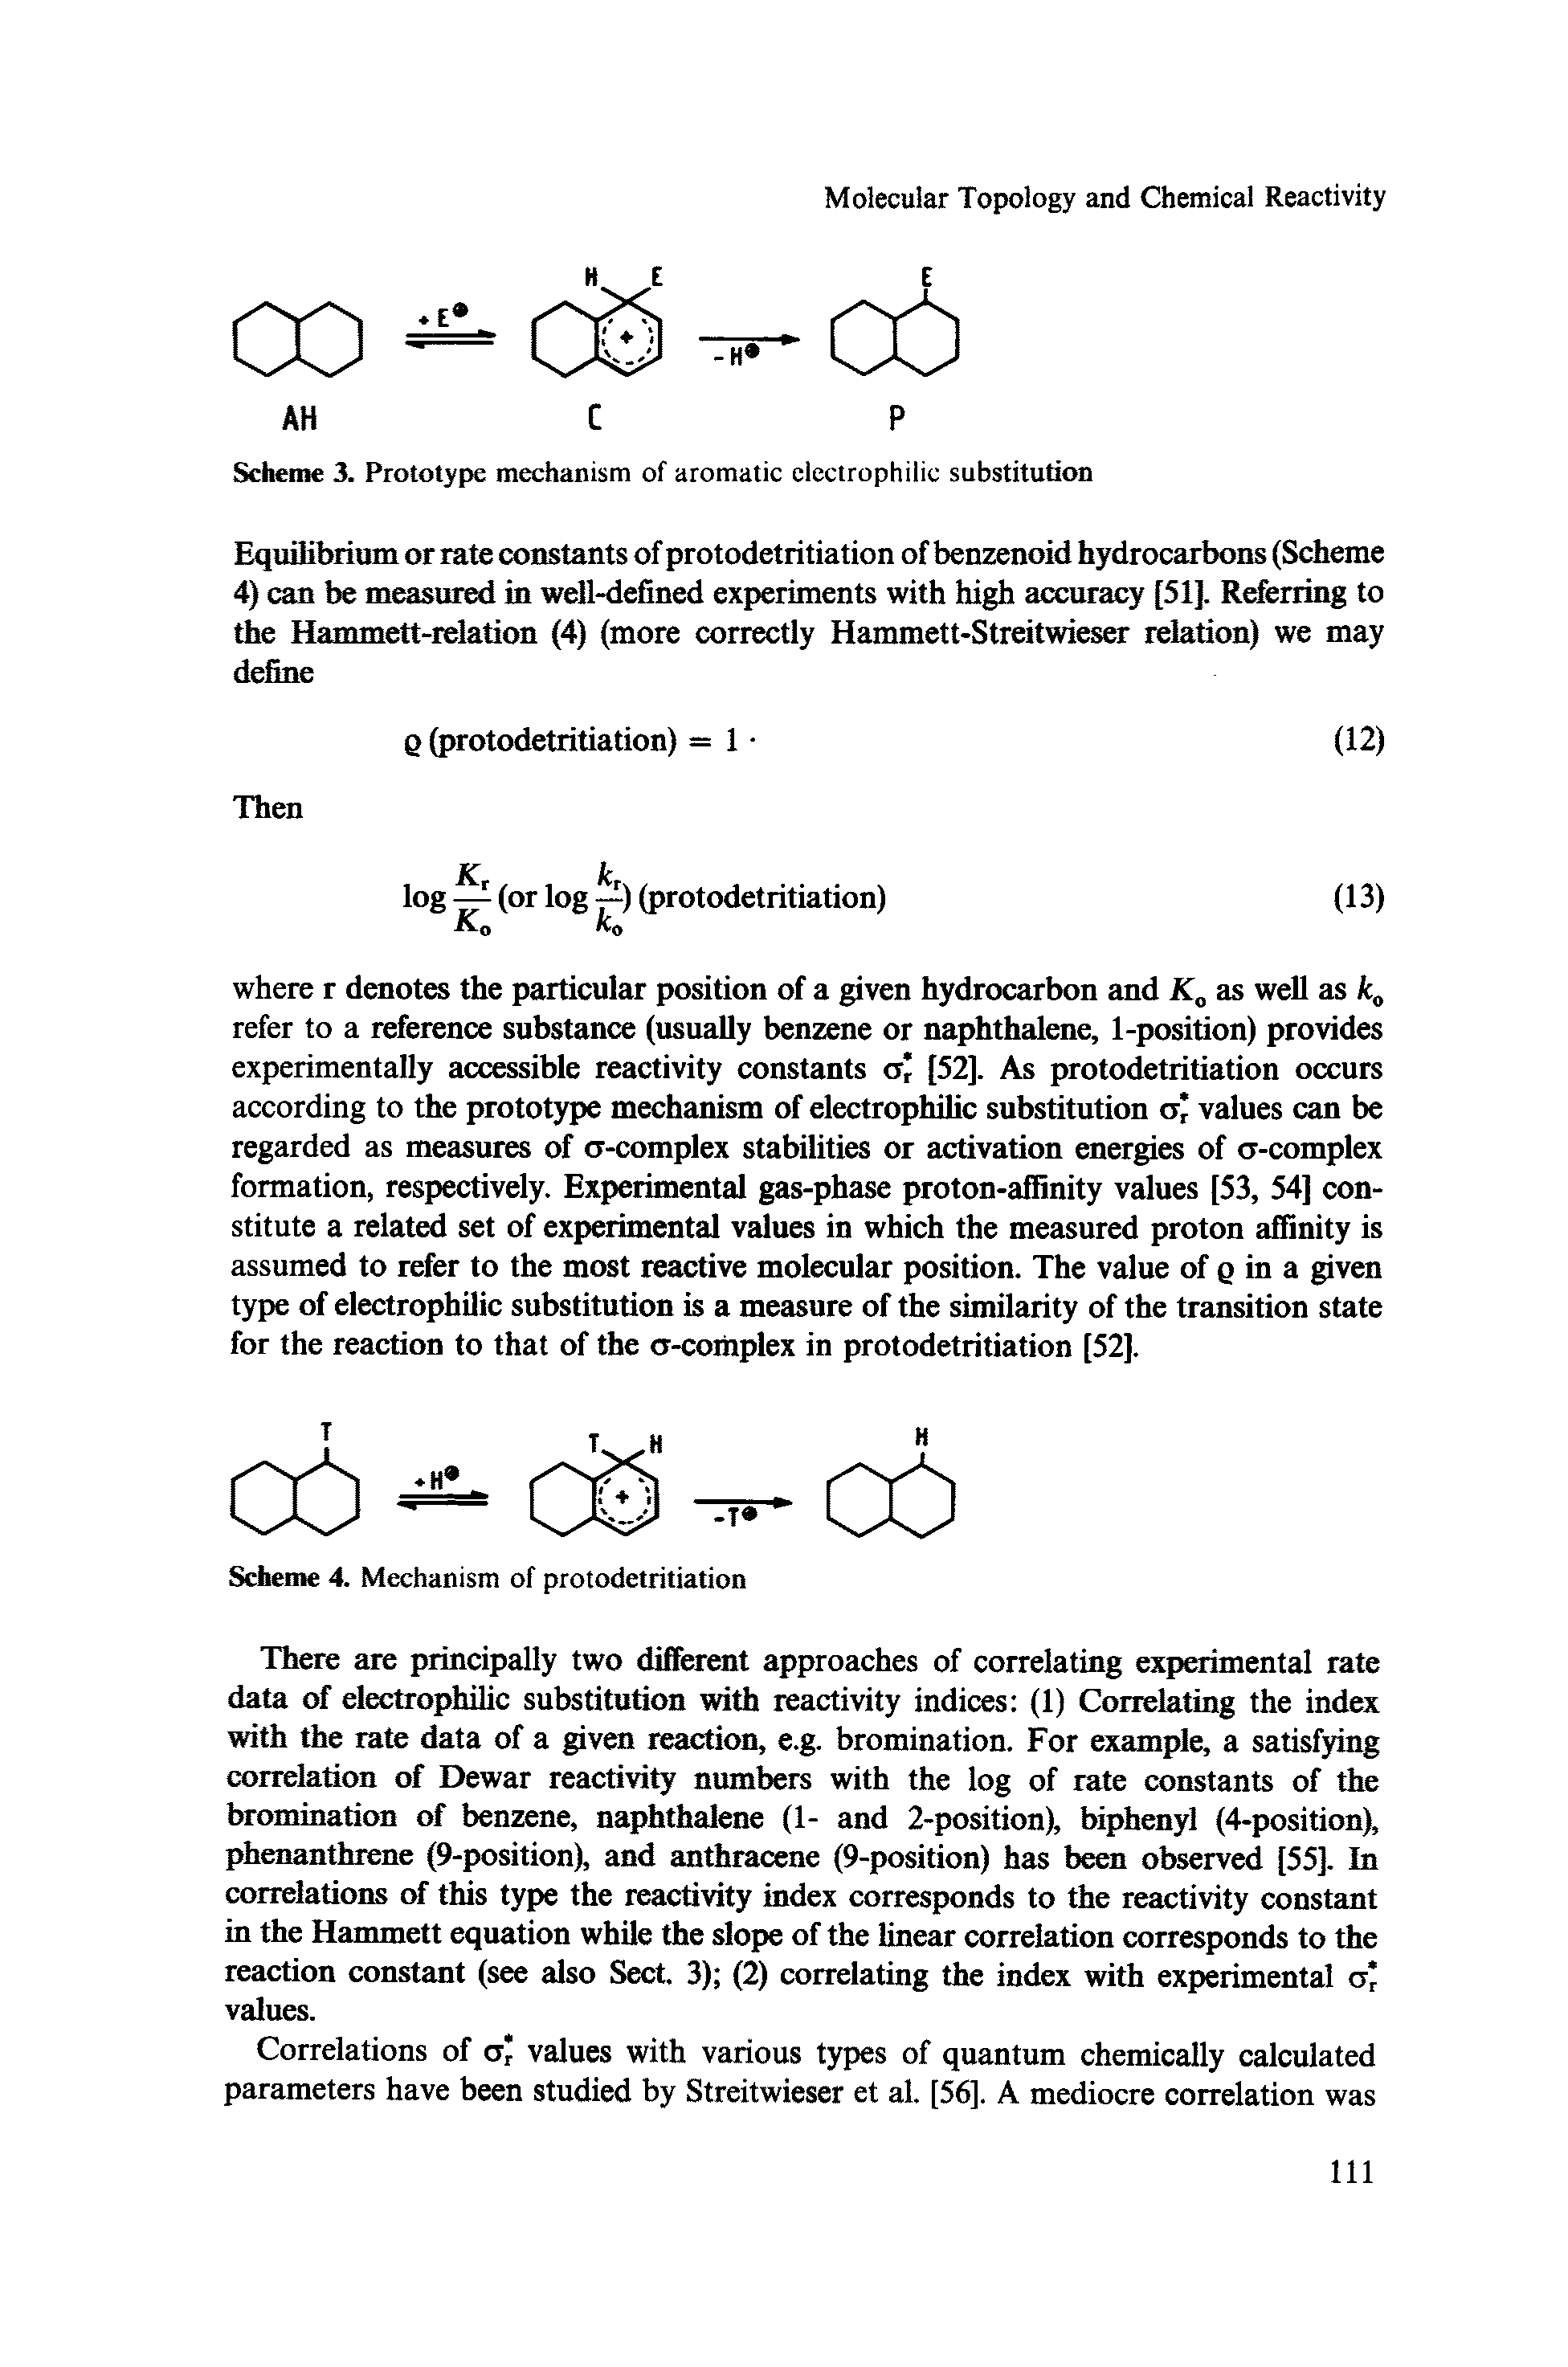 Scheme 3. Prototype mechanism of aromatic electrophilic substitution...